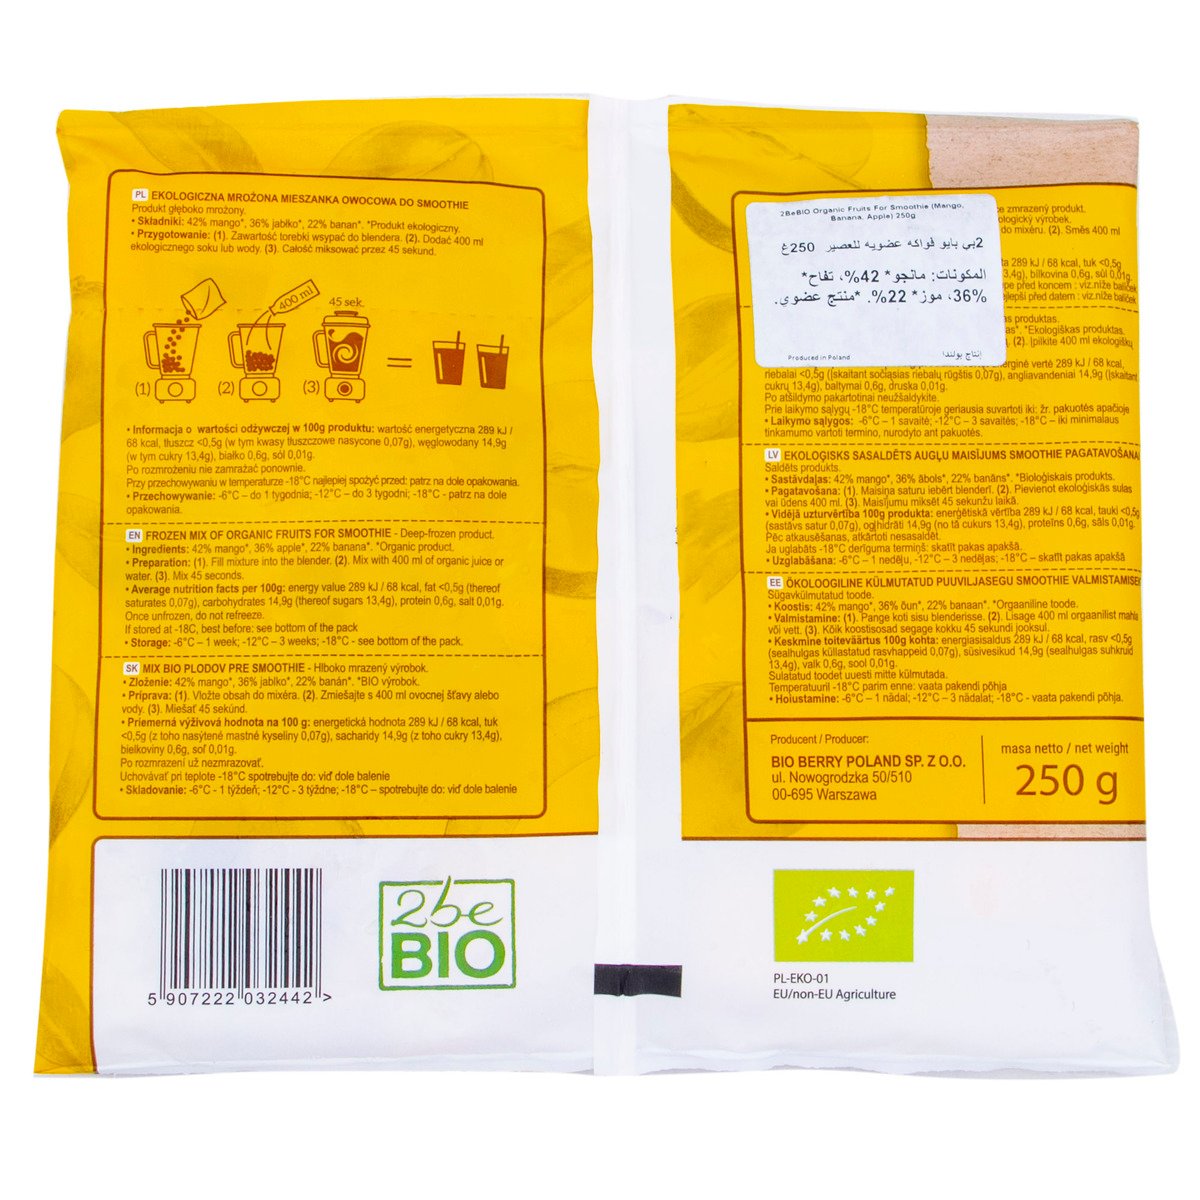 2be Bio Organic Mango, Banana & Apple Smoothie 250 g